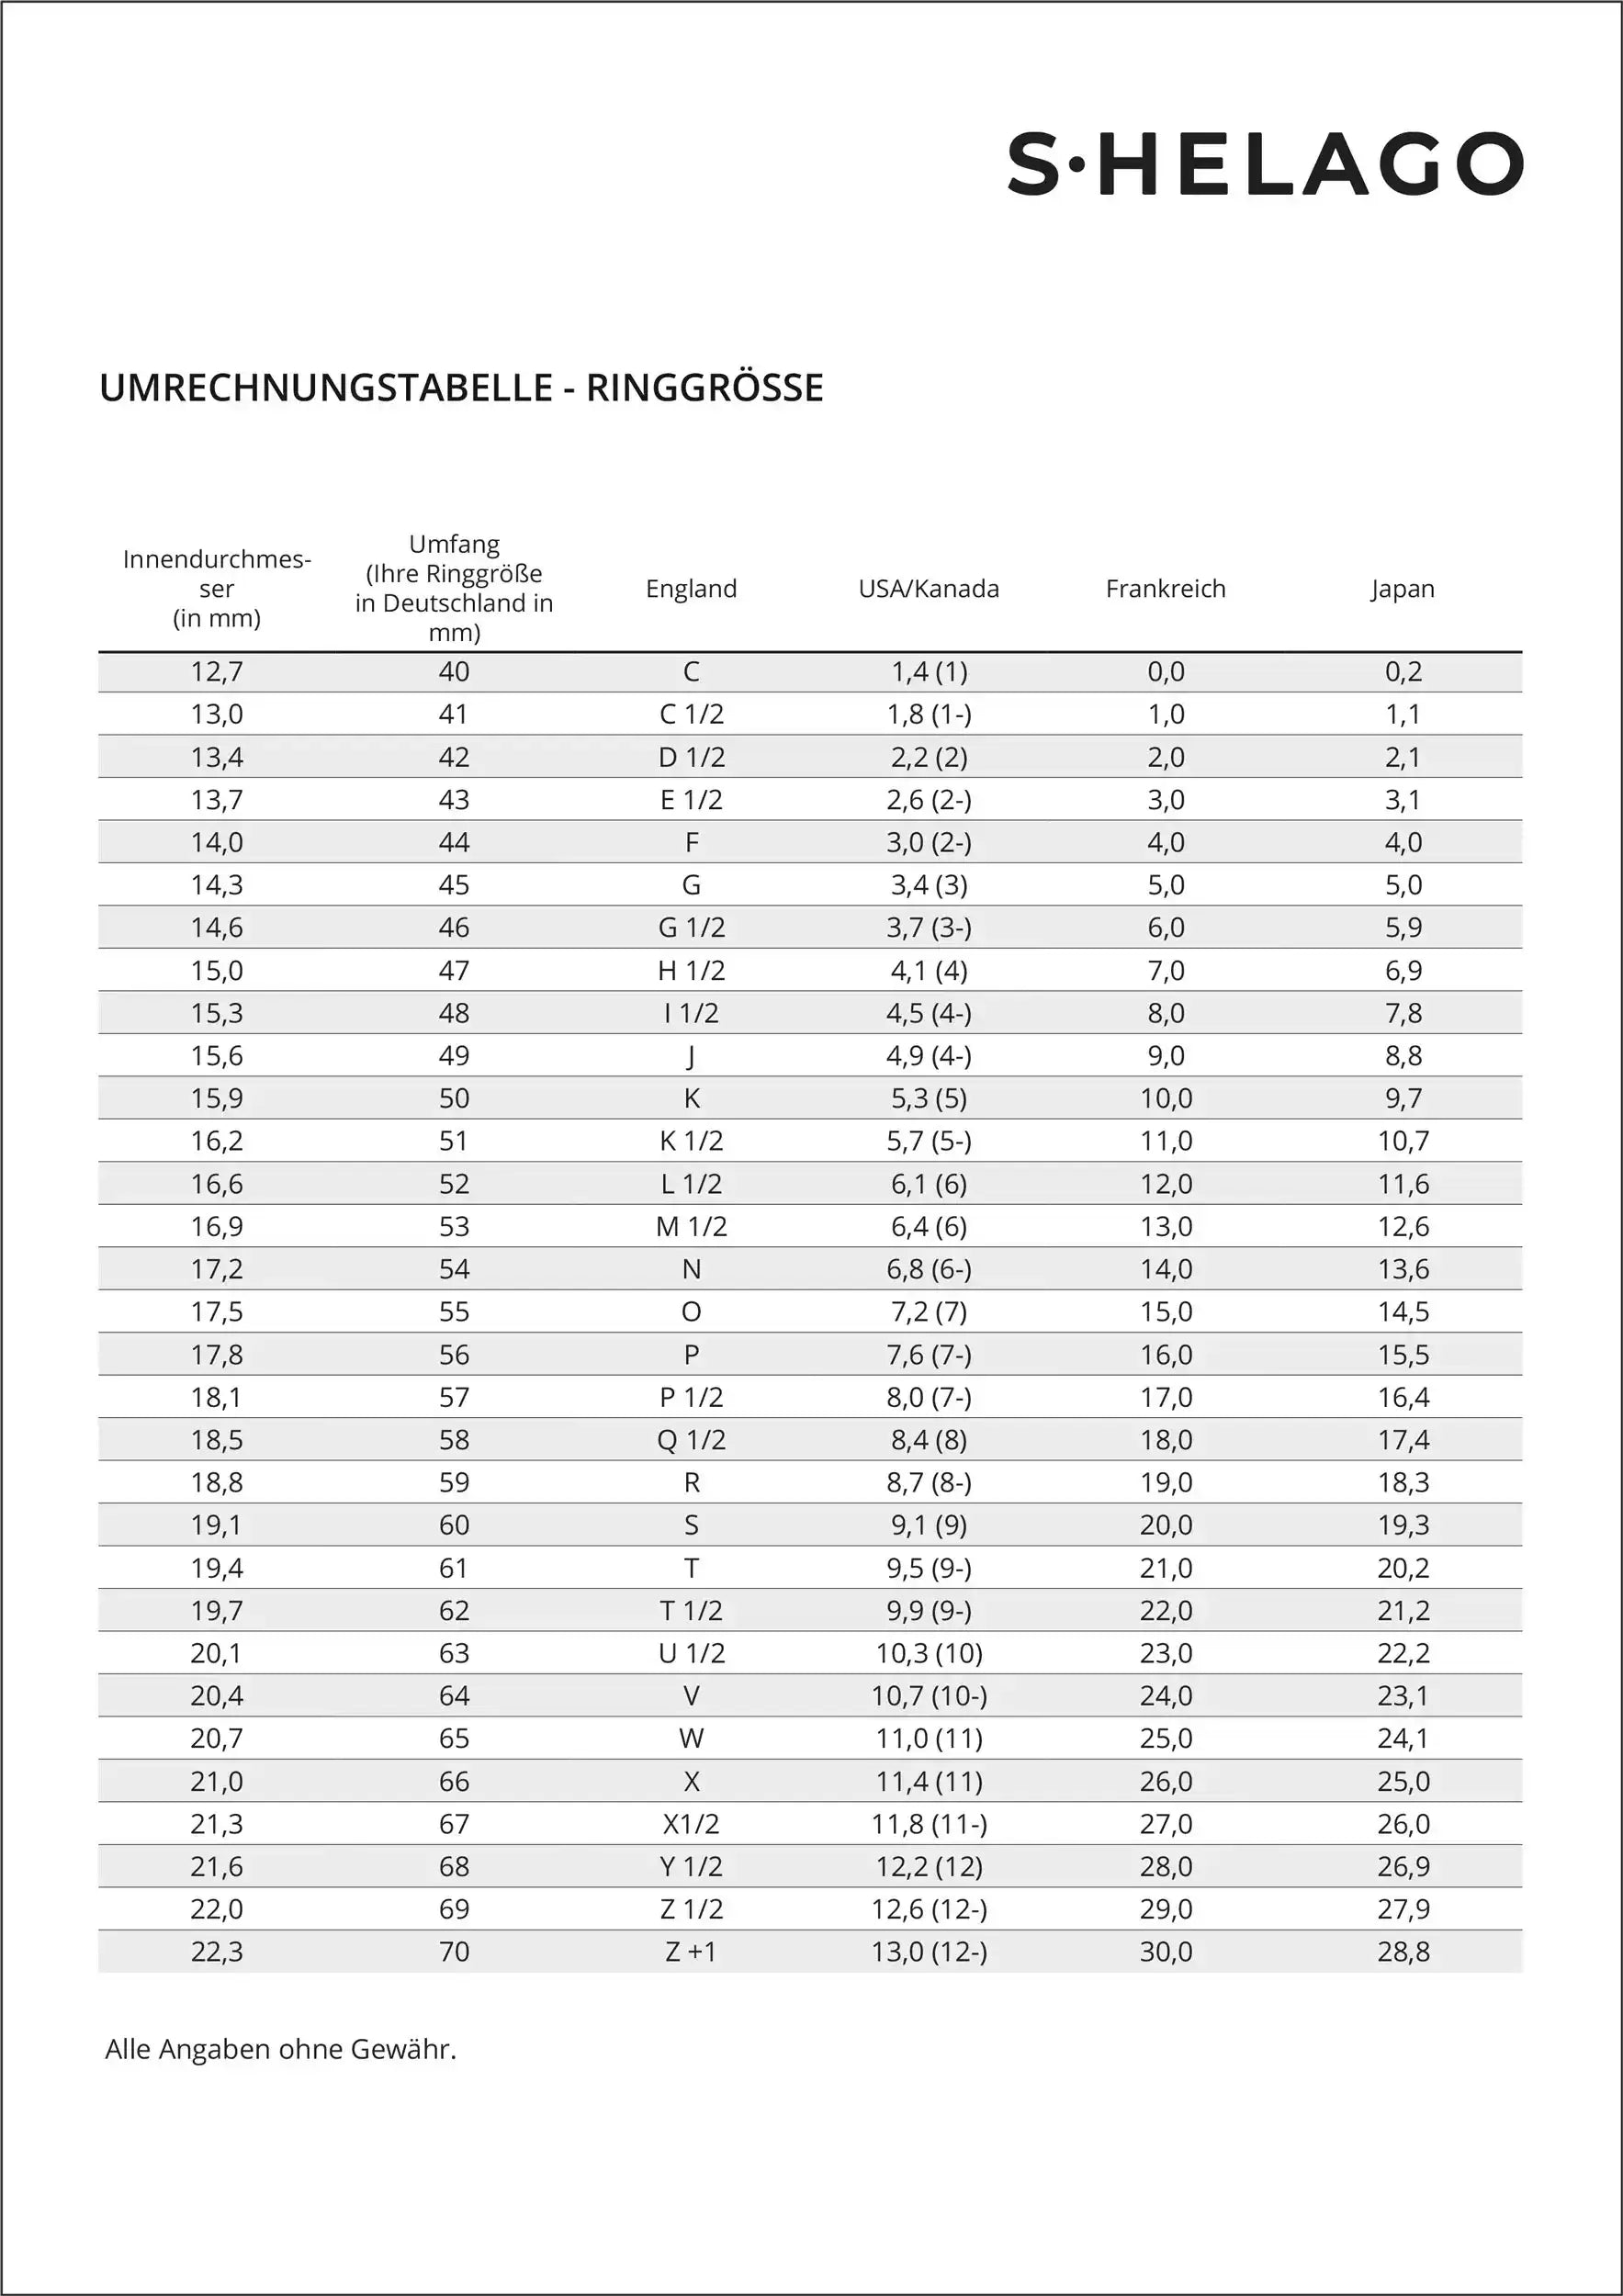 Ringgroessen-Tabelle-shelago-schmuck-europe